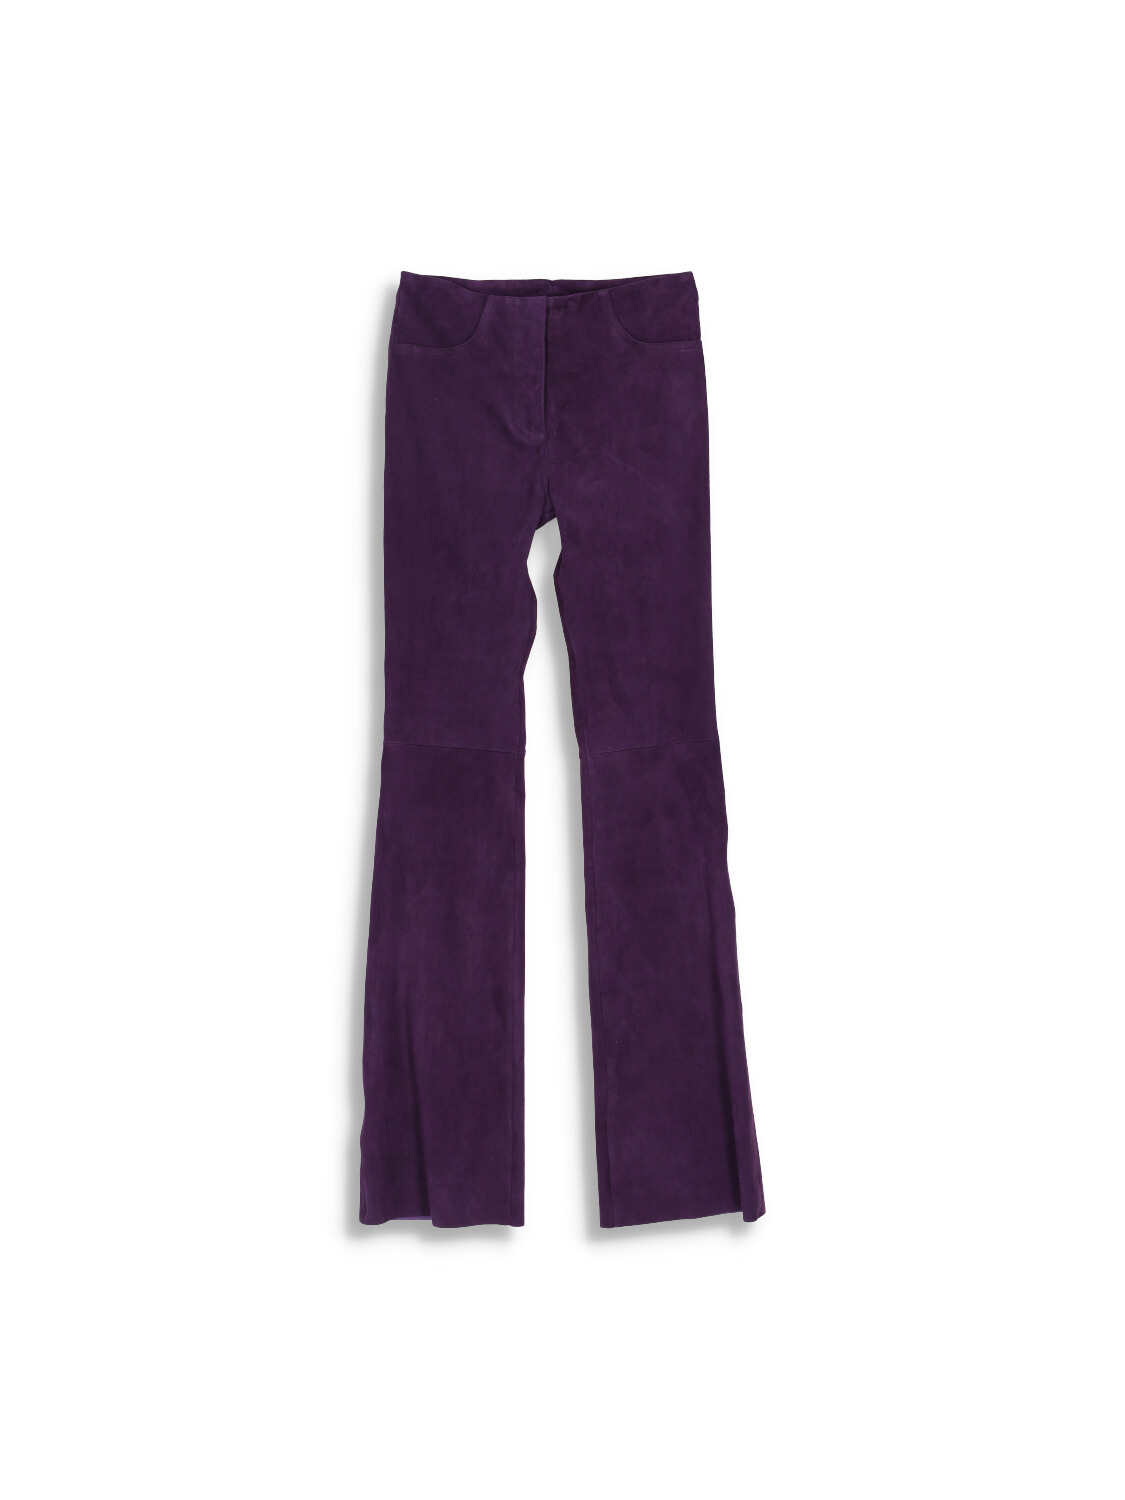 jitrois Pantalon Pika - Bootcuts in suede leather purple 38